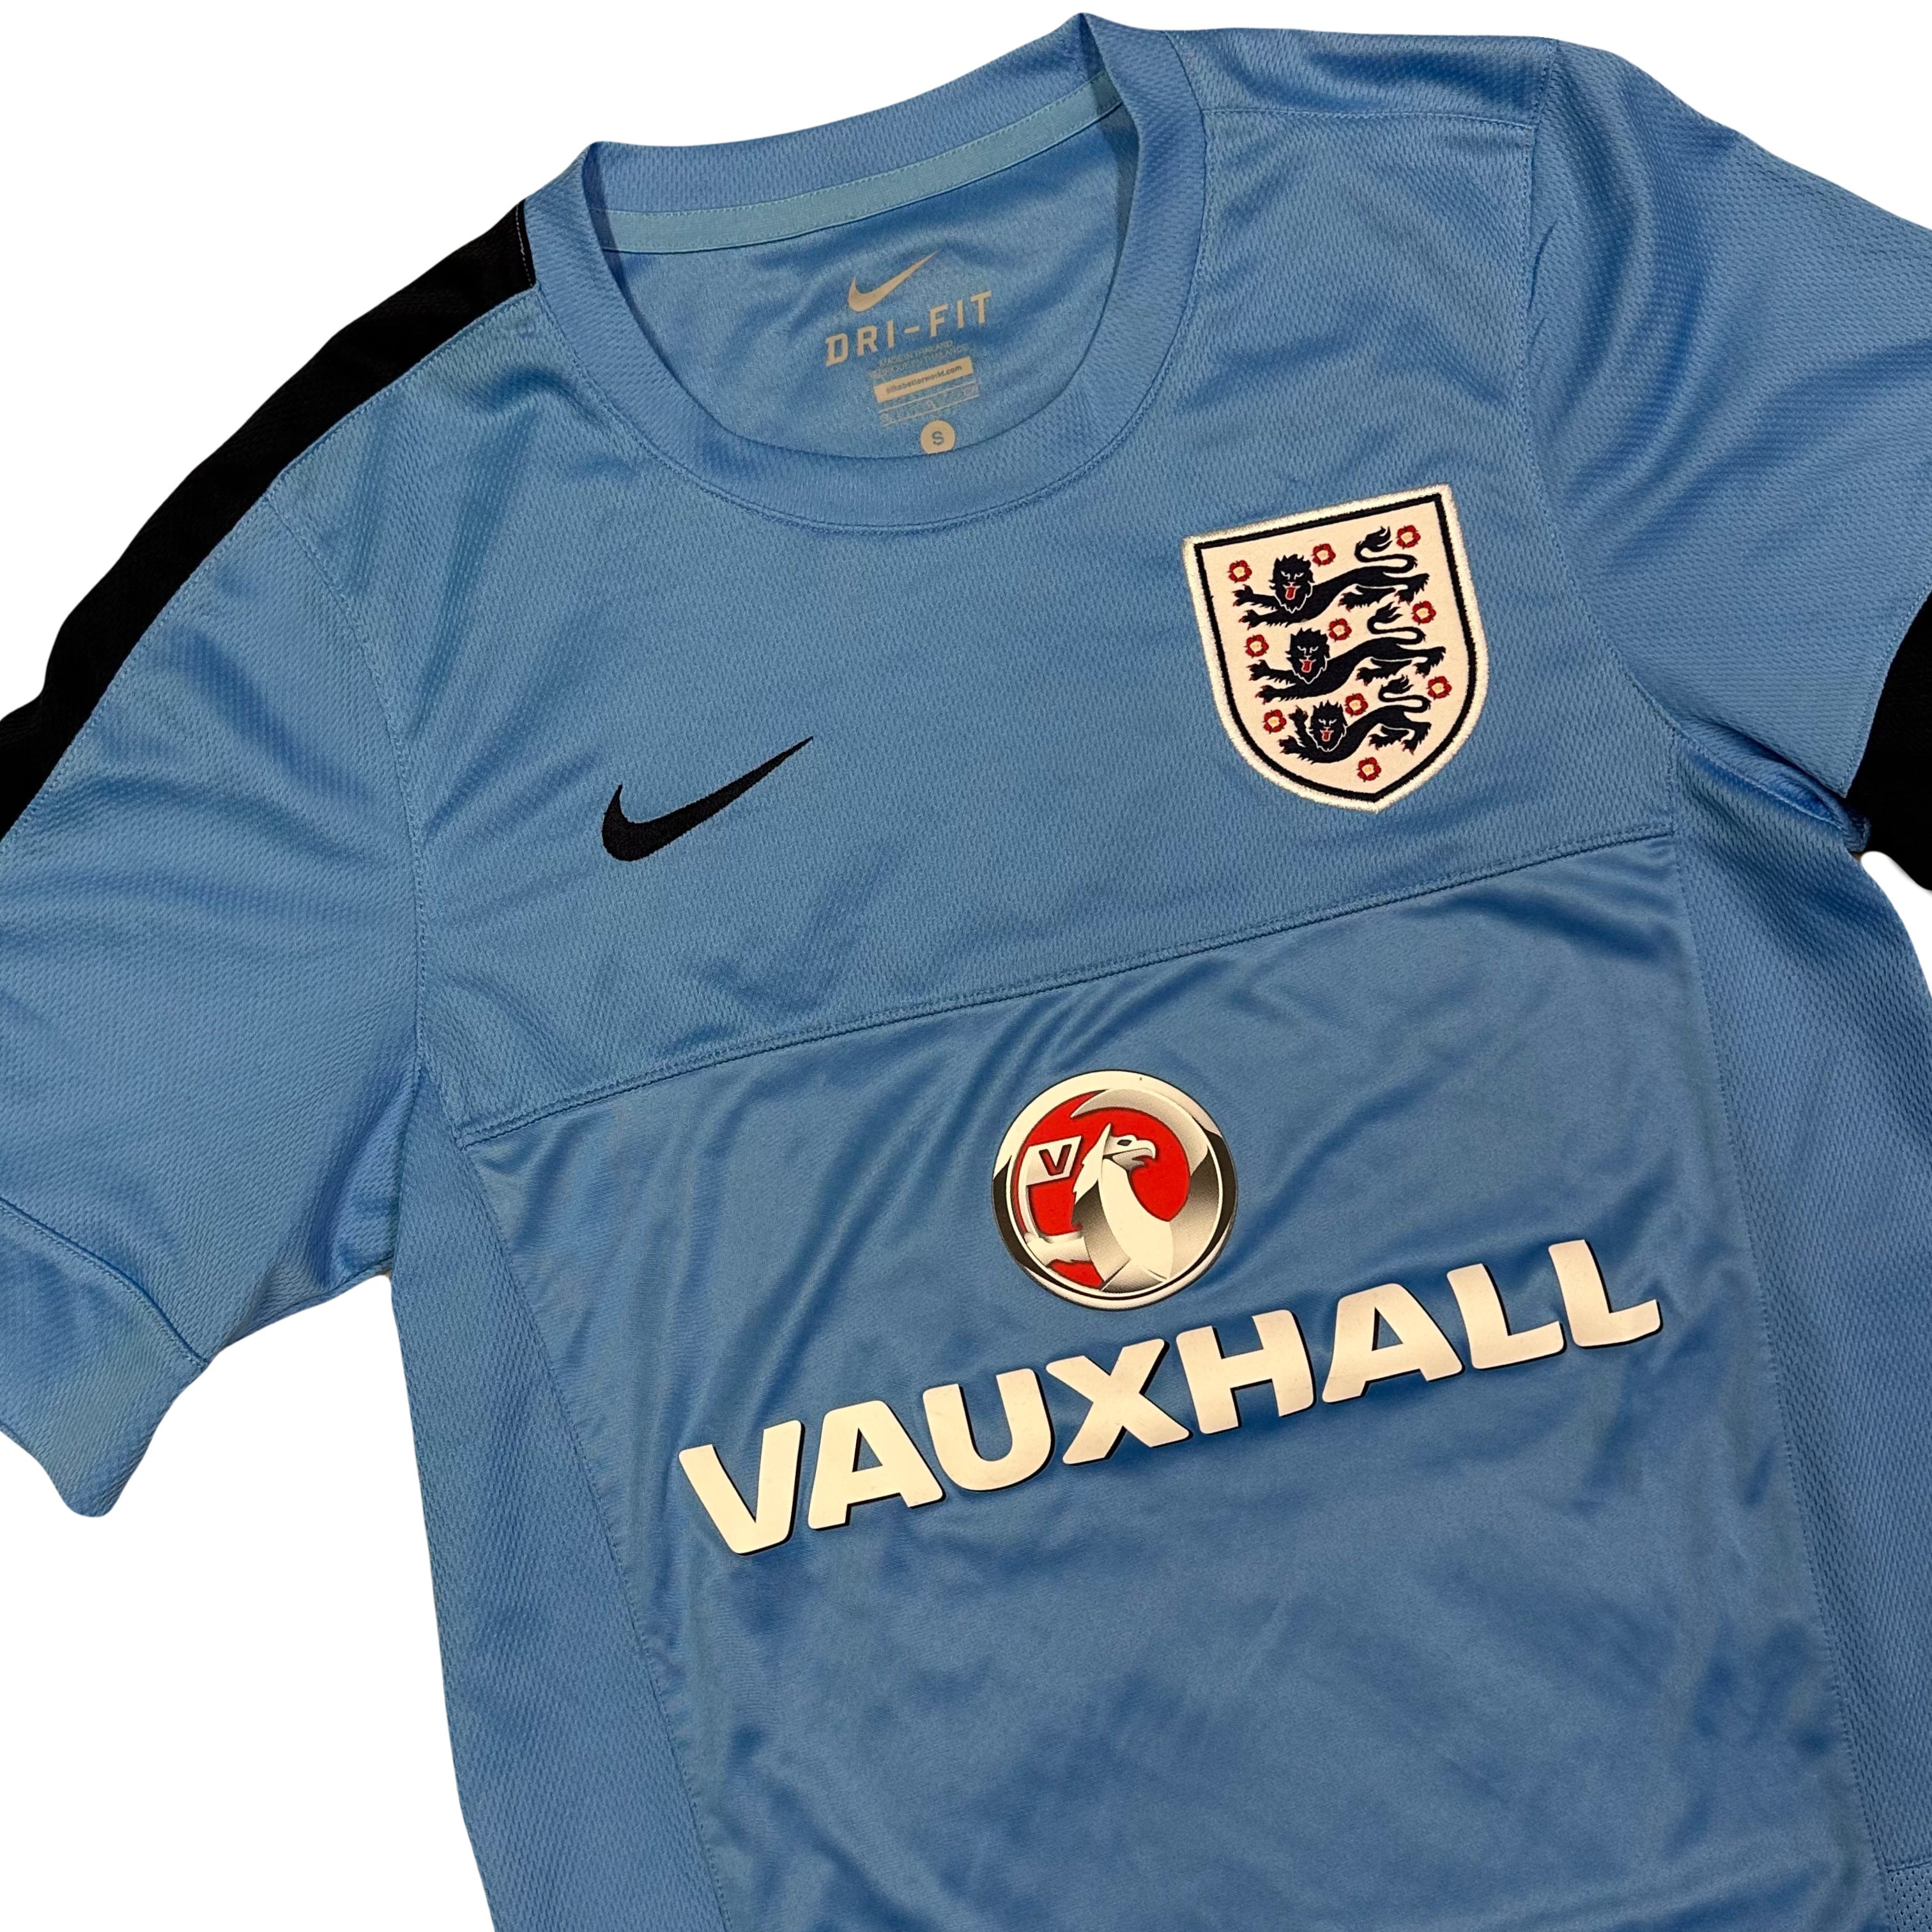 Nike England 2013 Training Shirt In Blue ( S )